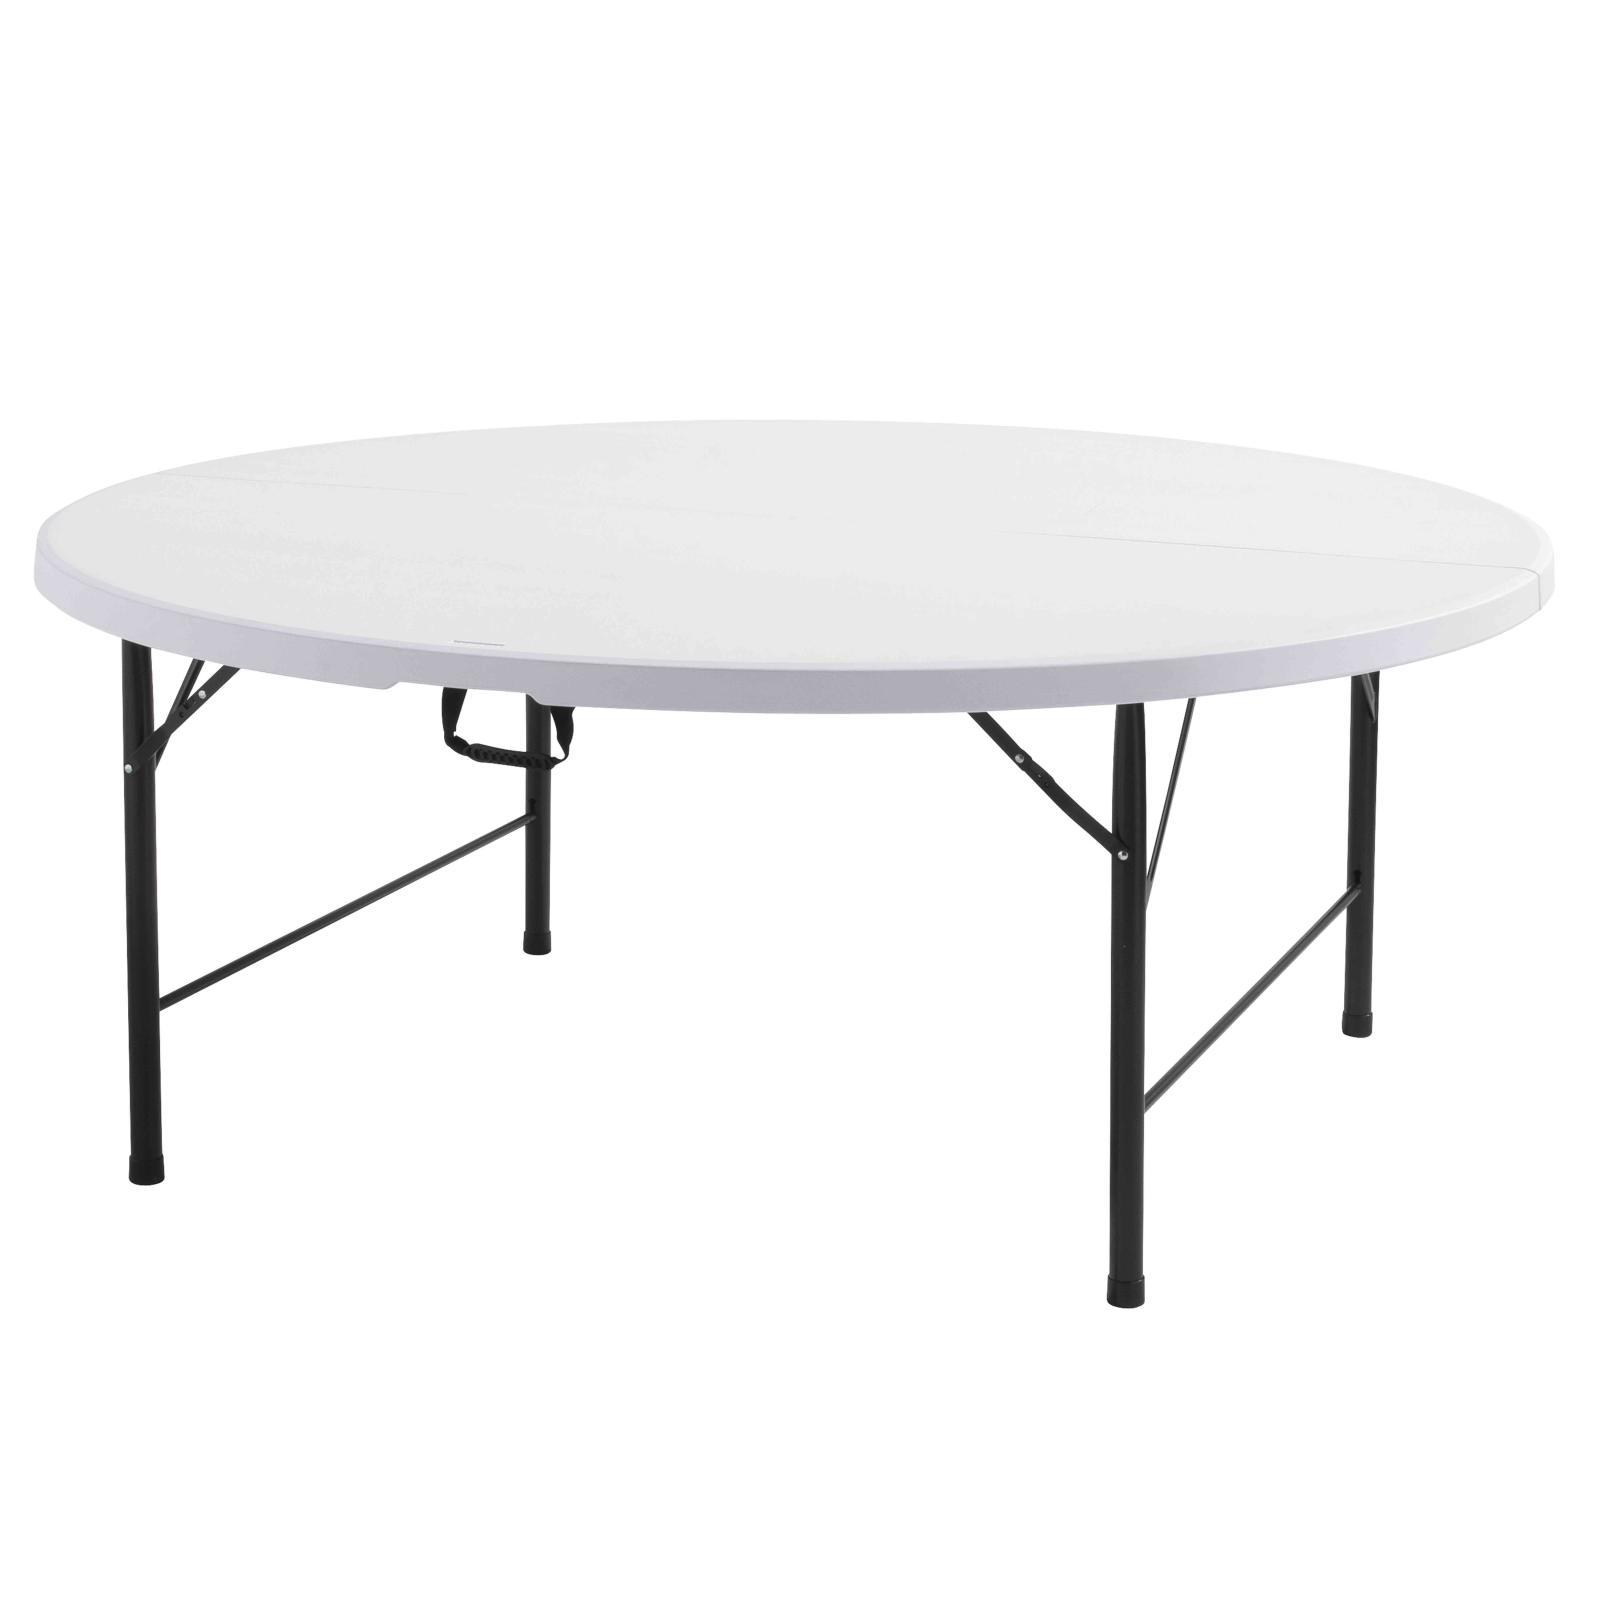 Table ronde pliante 180 cm - Lot de 5 - Cdiscount Jardin